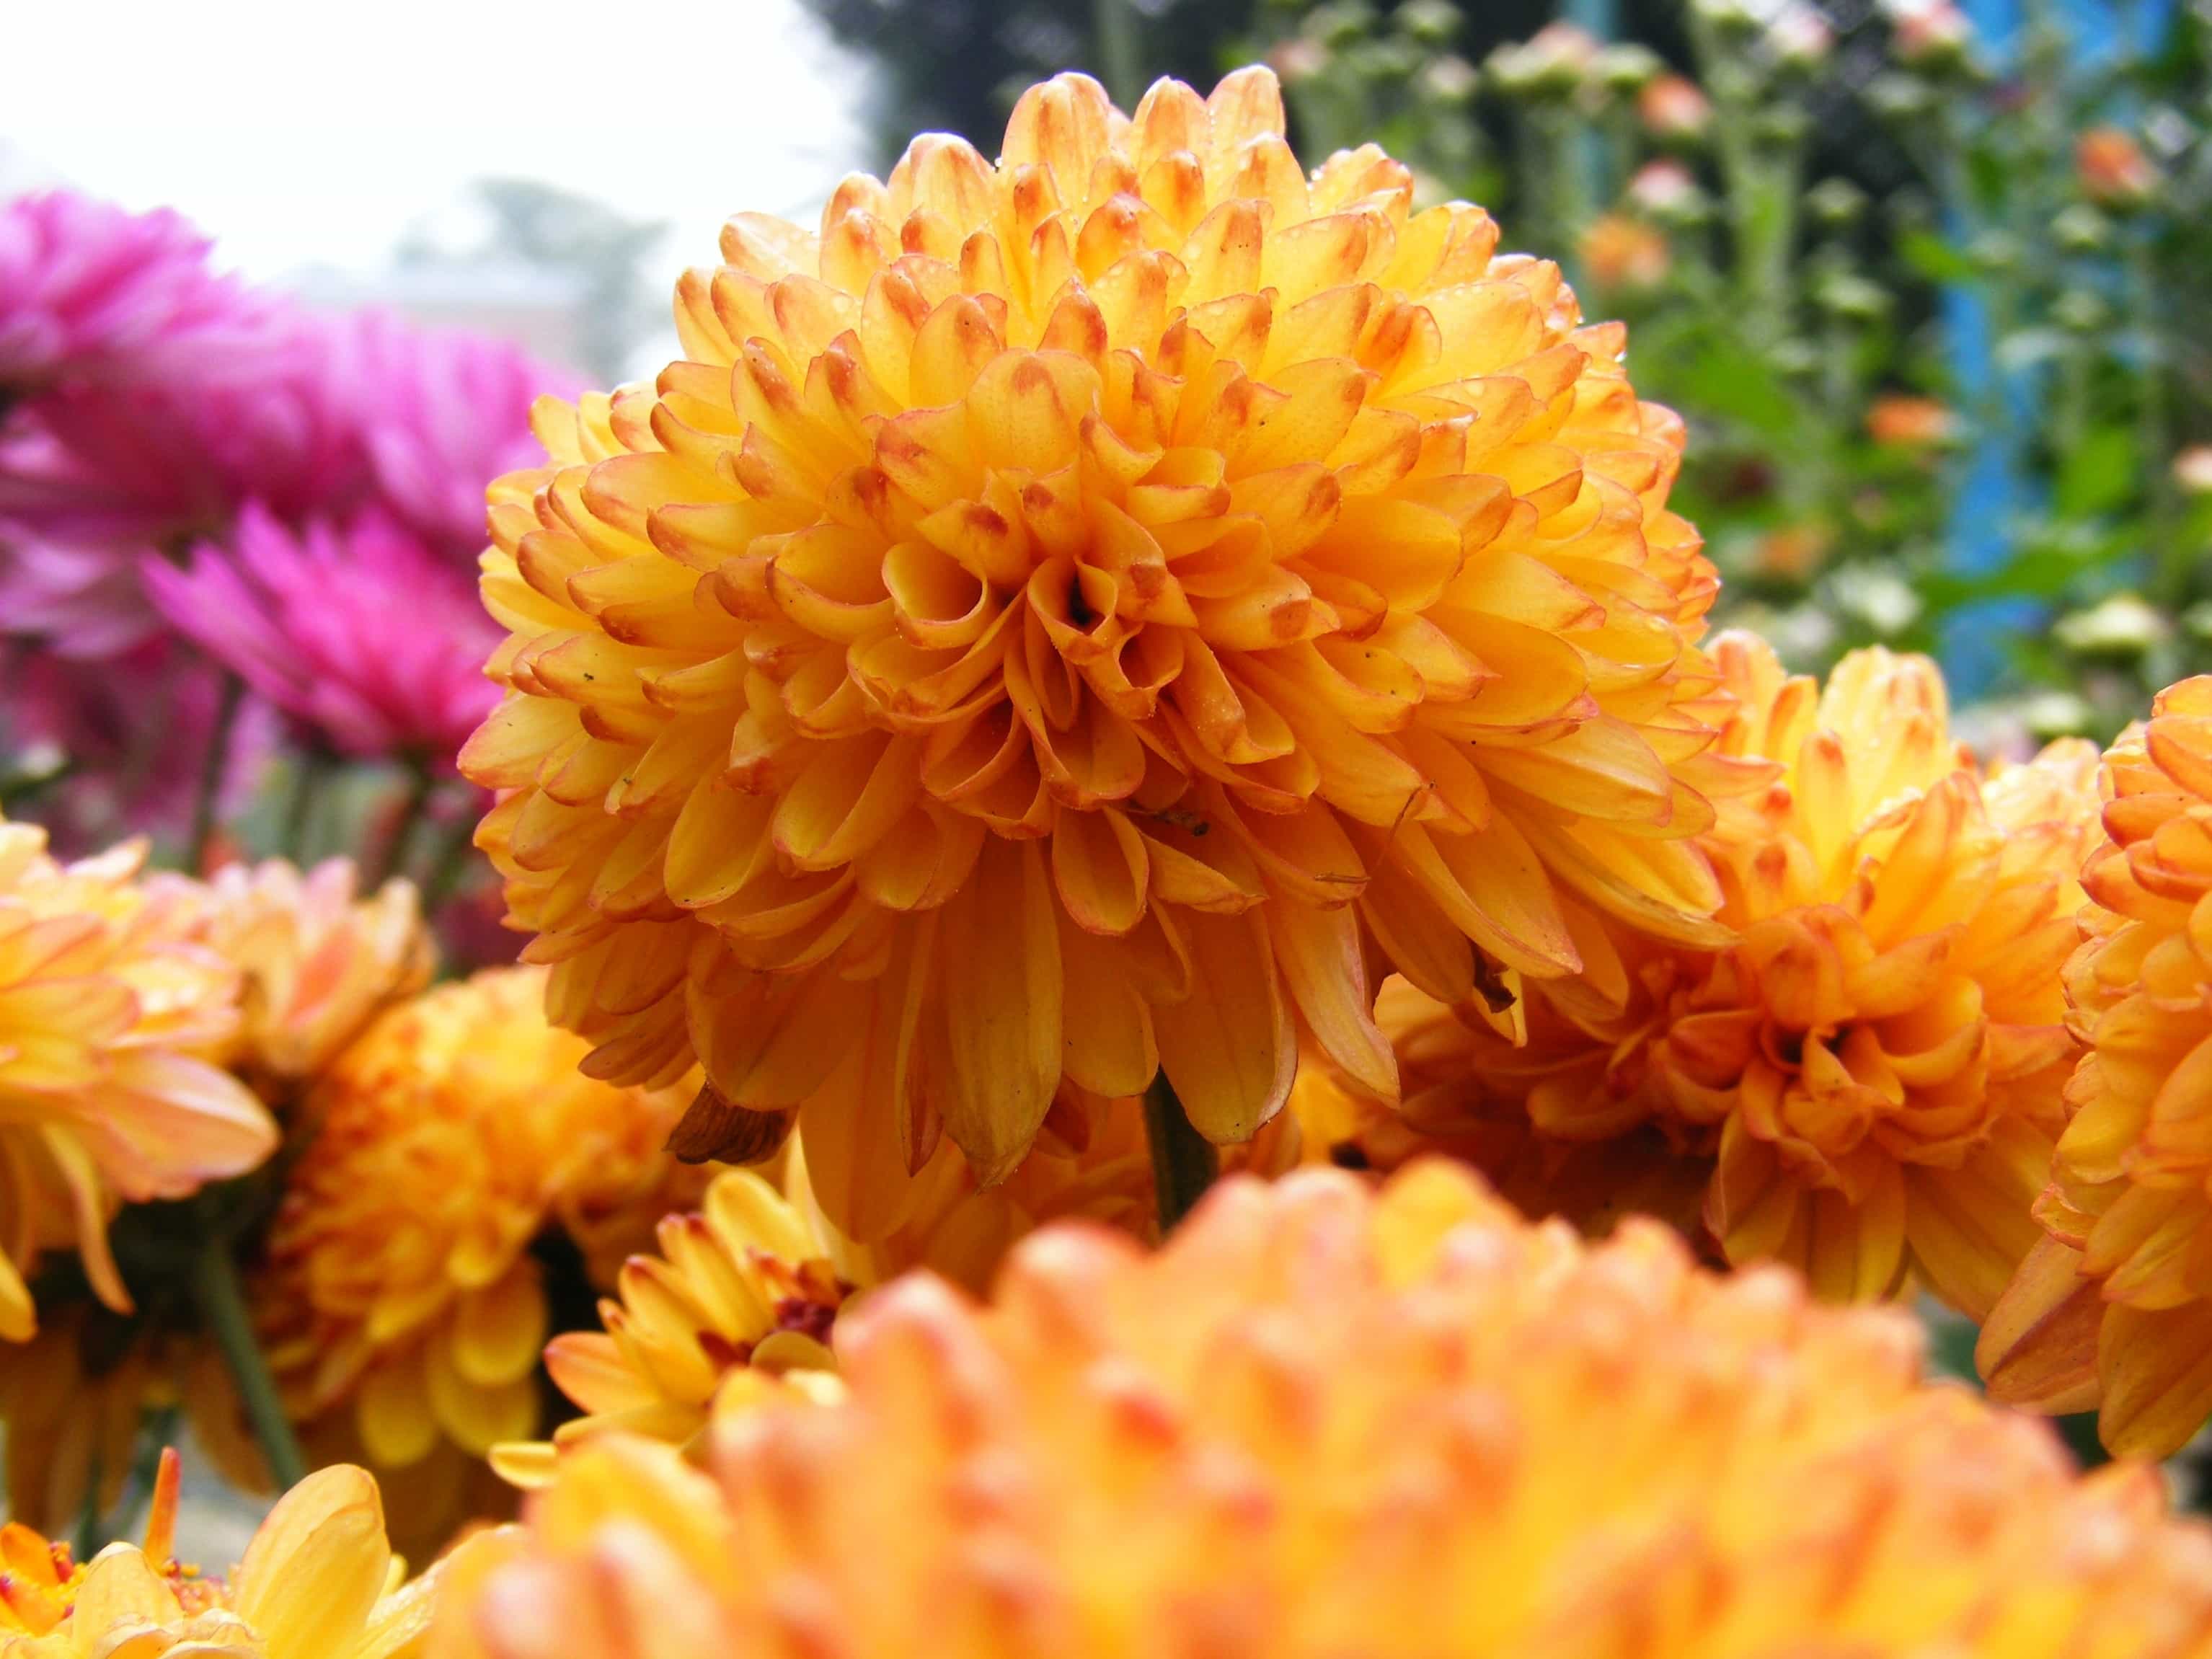 Imagem gratuita: Verão, Beautiful, cor laranja, pétala, jardim, Dahlia  flor, natureza, erva, planta